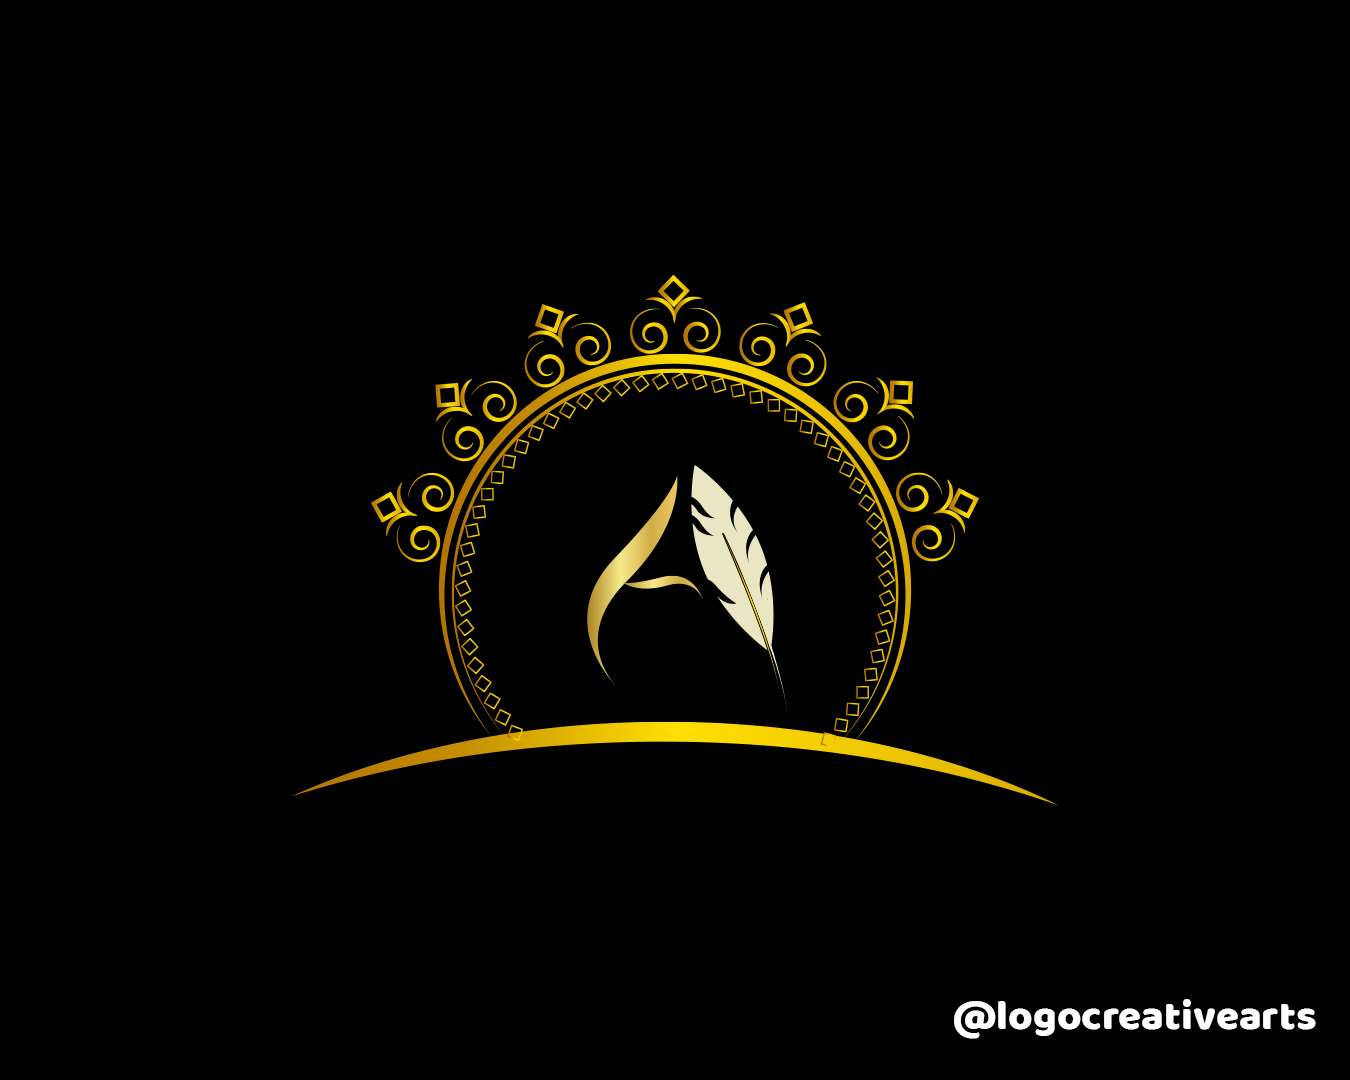 Gold Effect Event Logo Design premium and professional event logo design